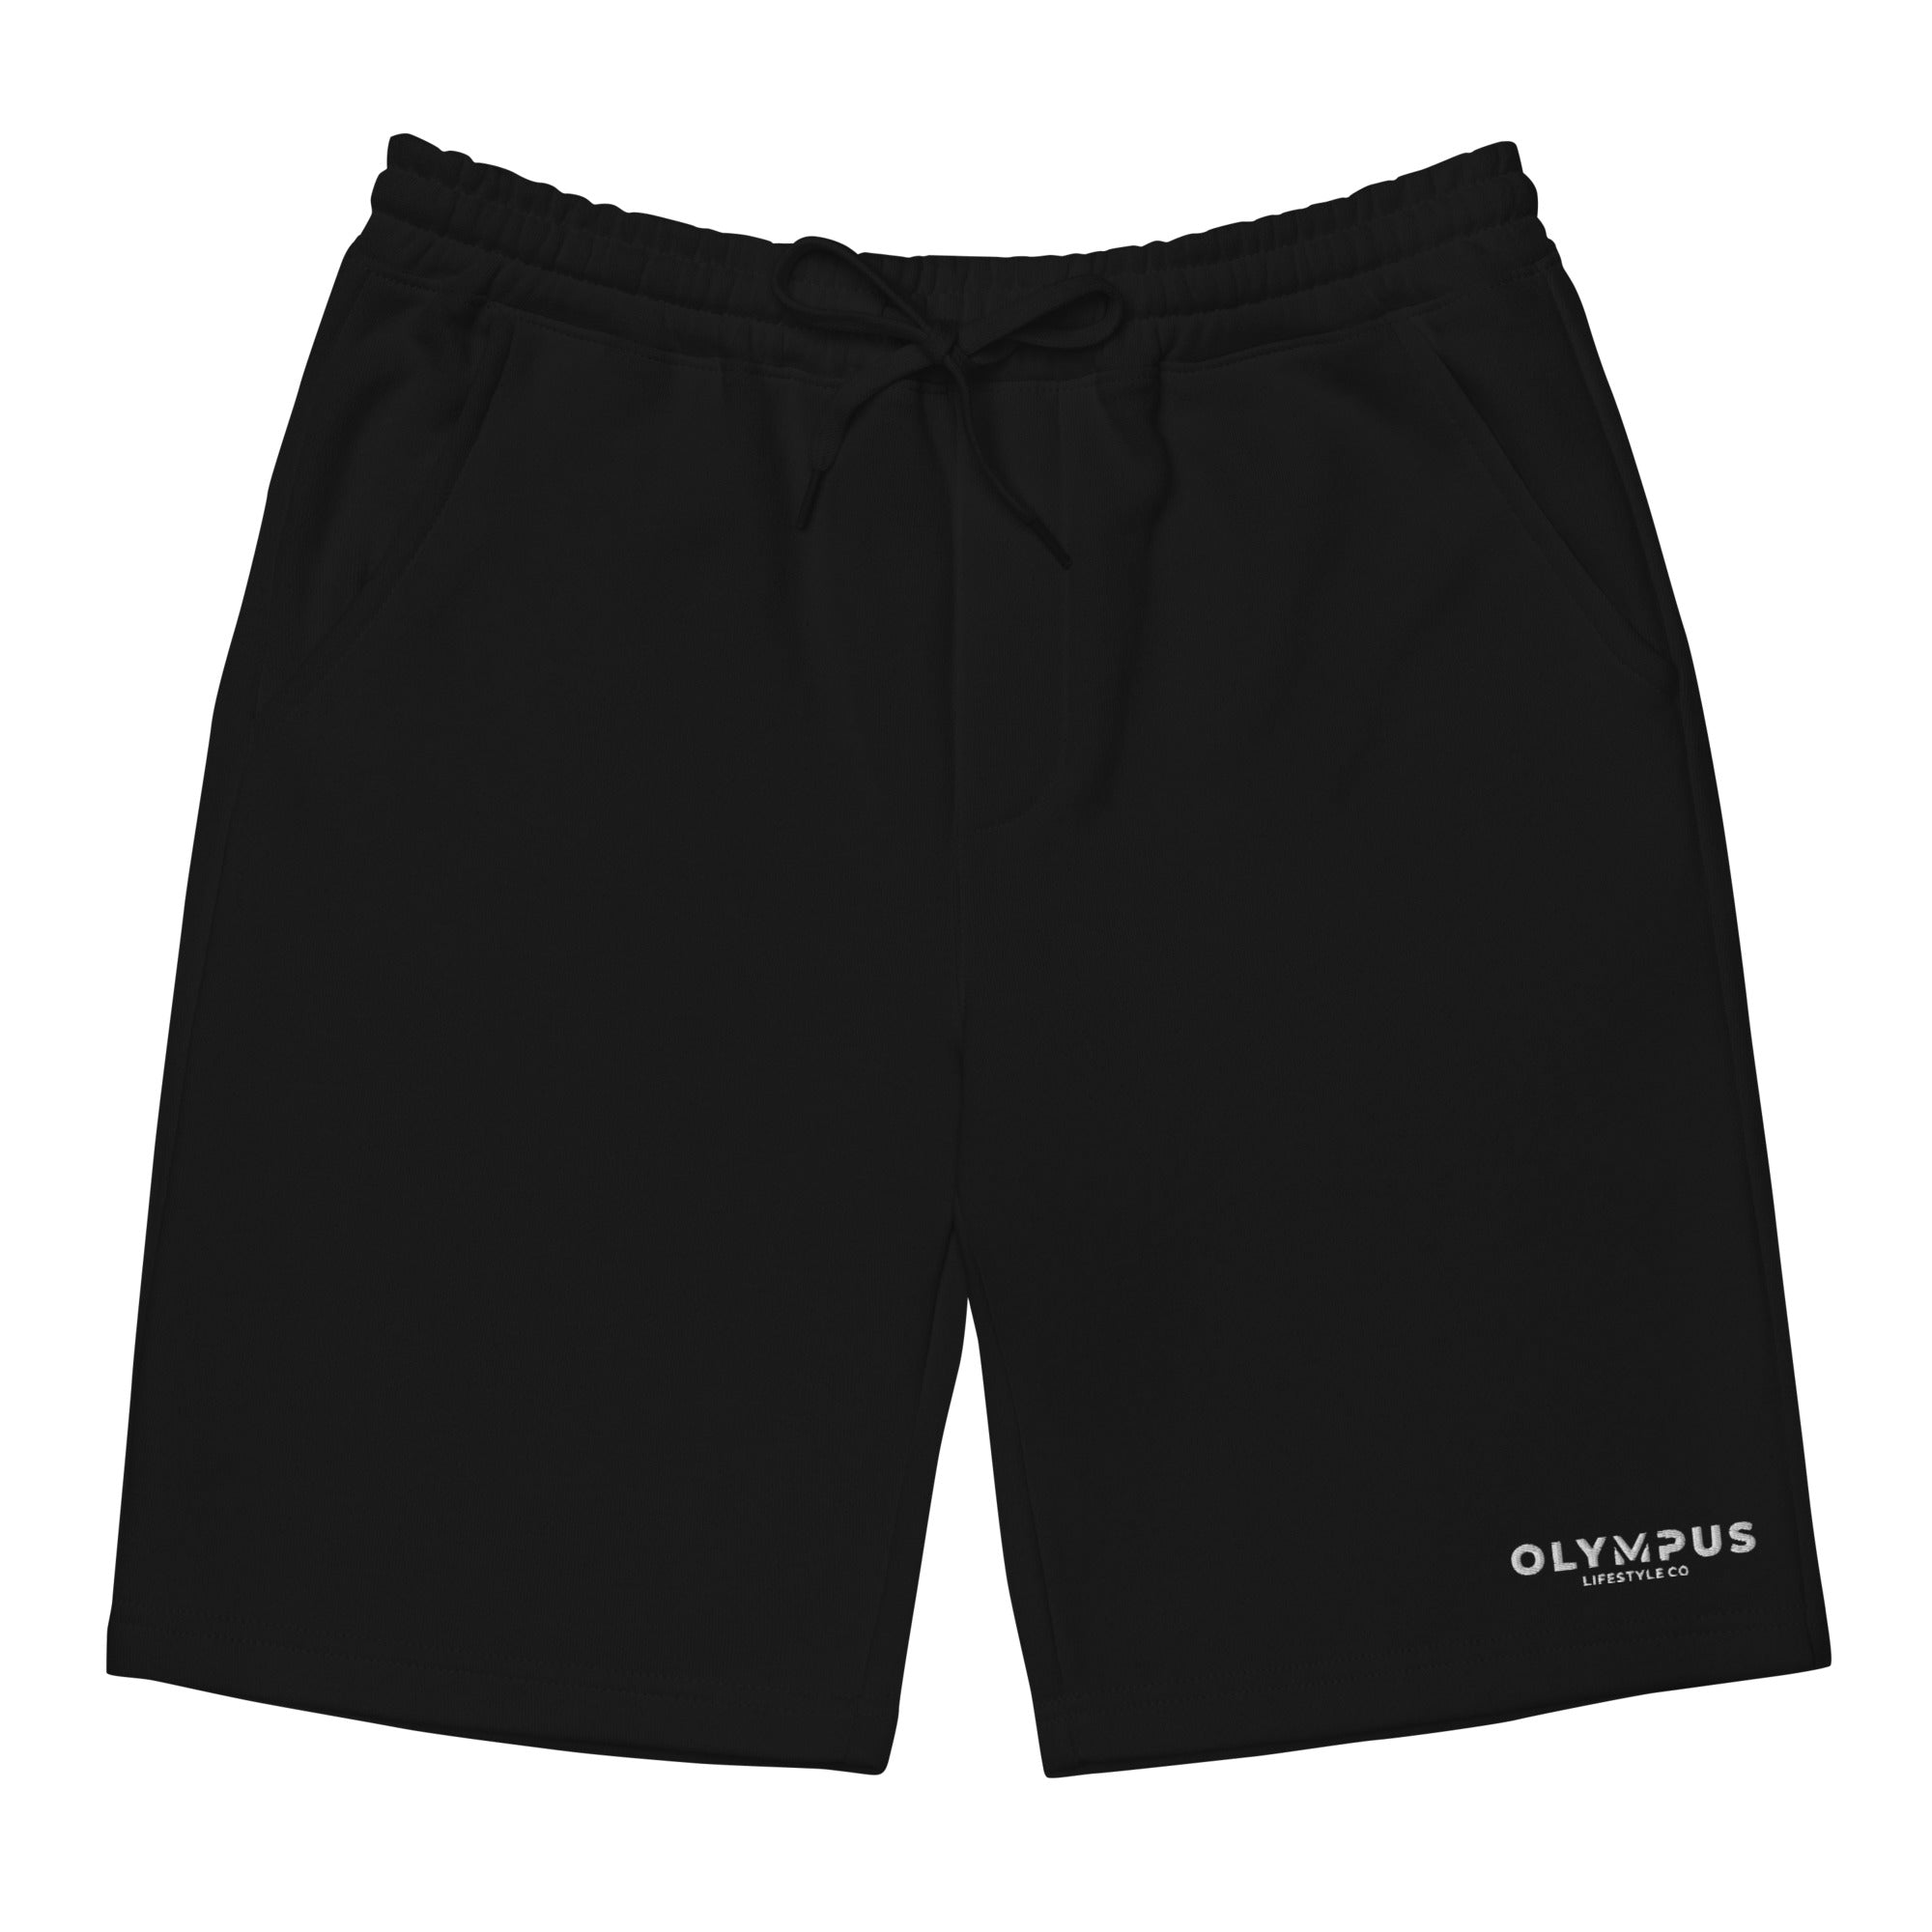 Olympus Men's Black Fleece Shorts White Text Logo